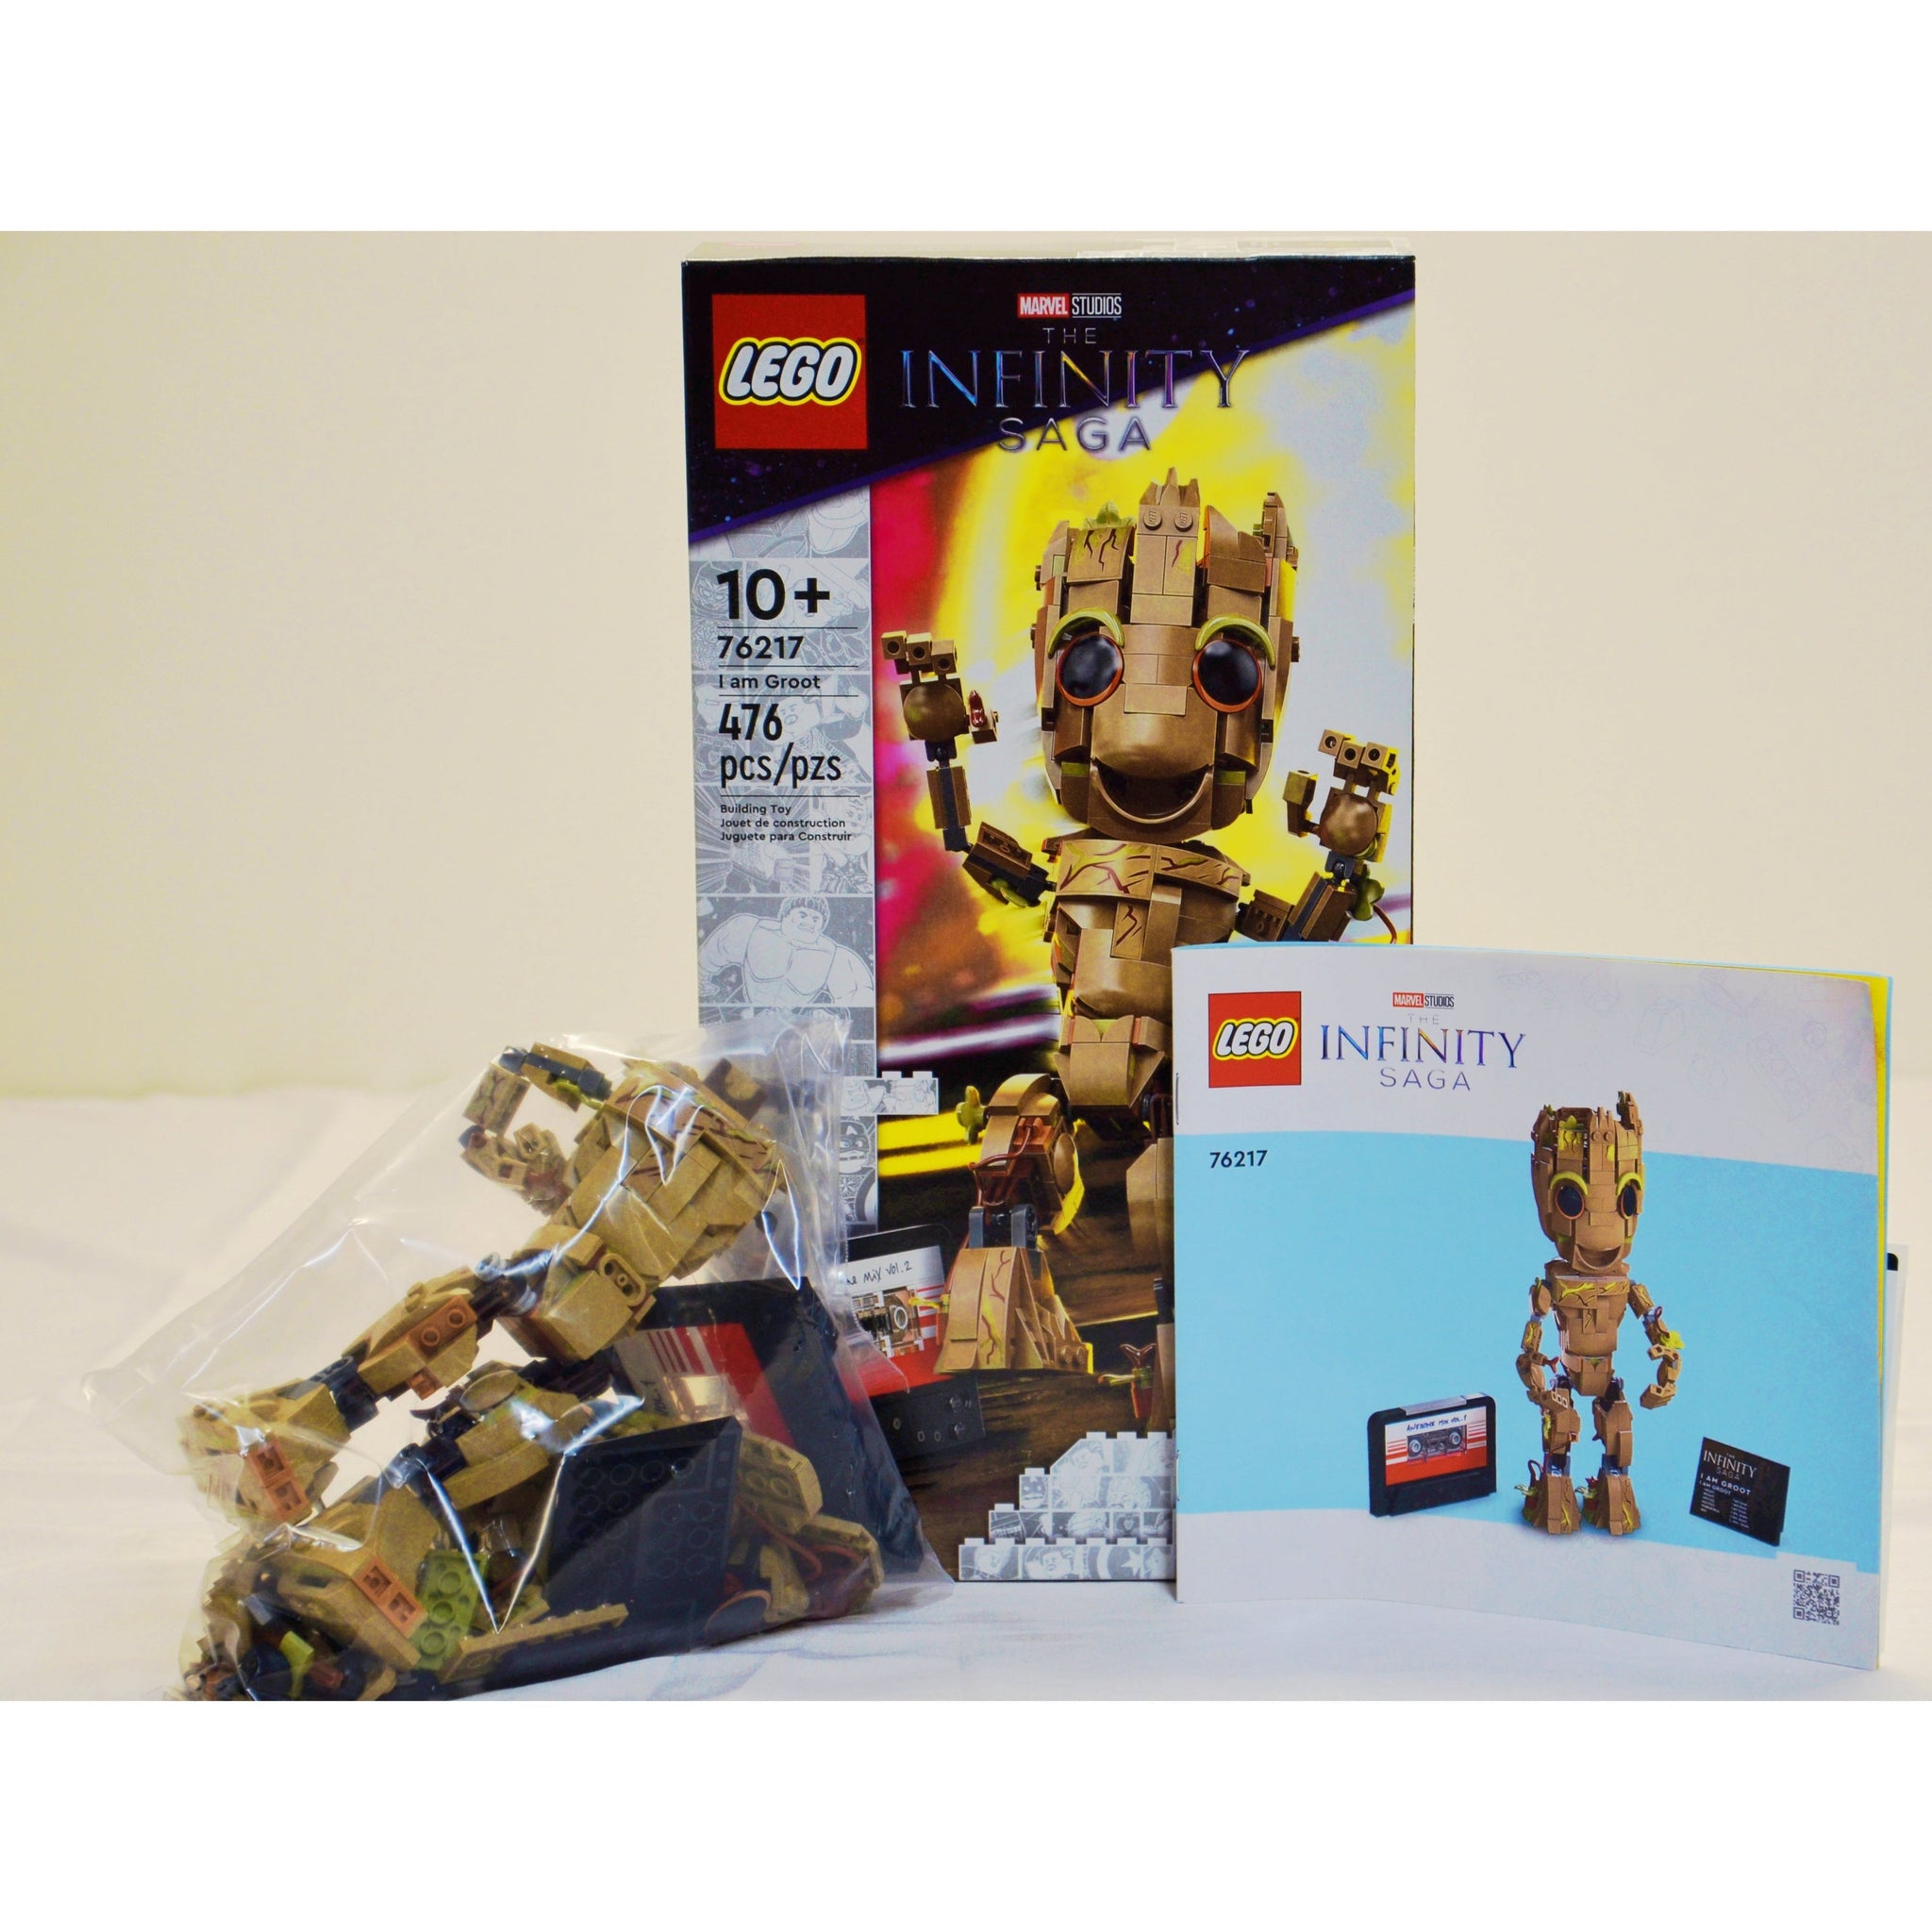 LEGO Marvel 66711 Infinity Saga Collection found at Costco